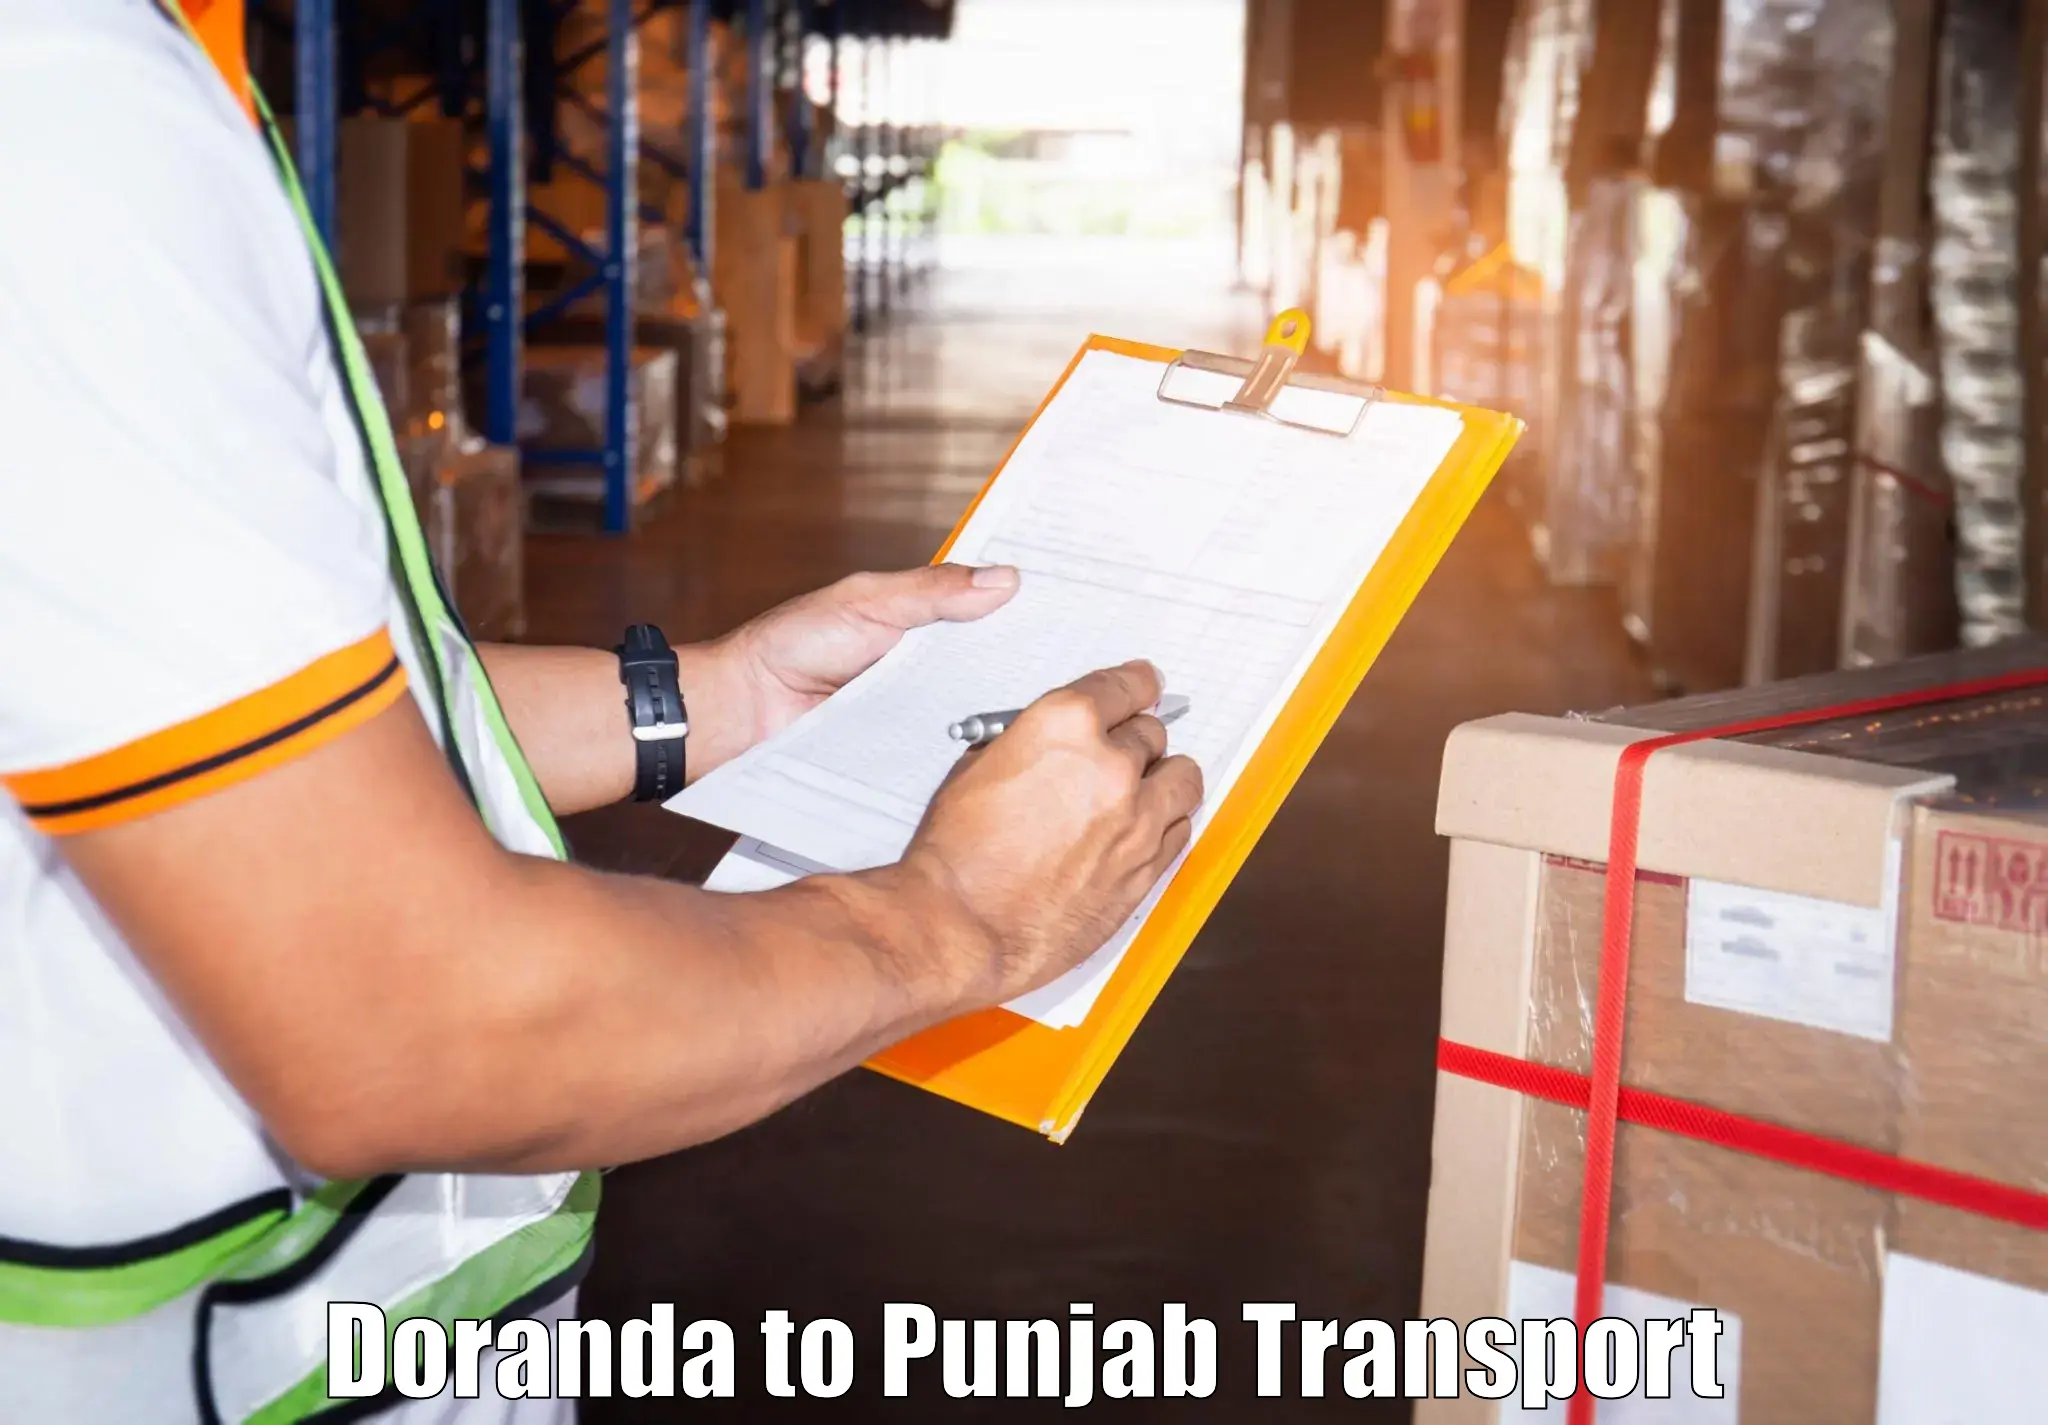 Two wheeler parcel service Doranda to Punjab